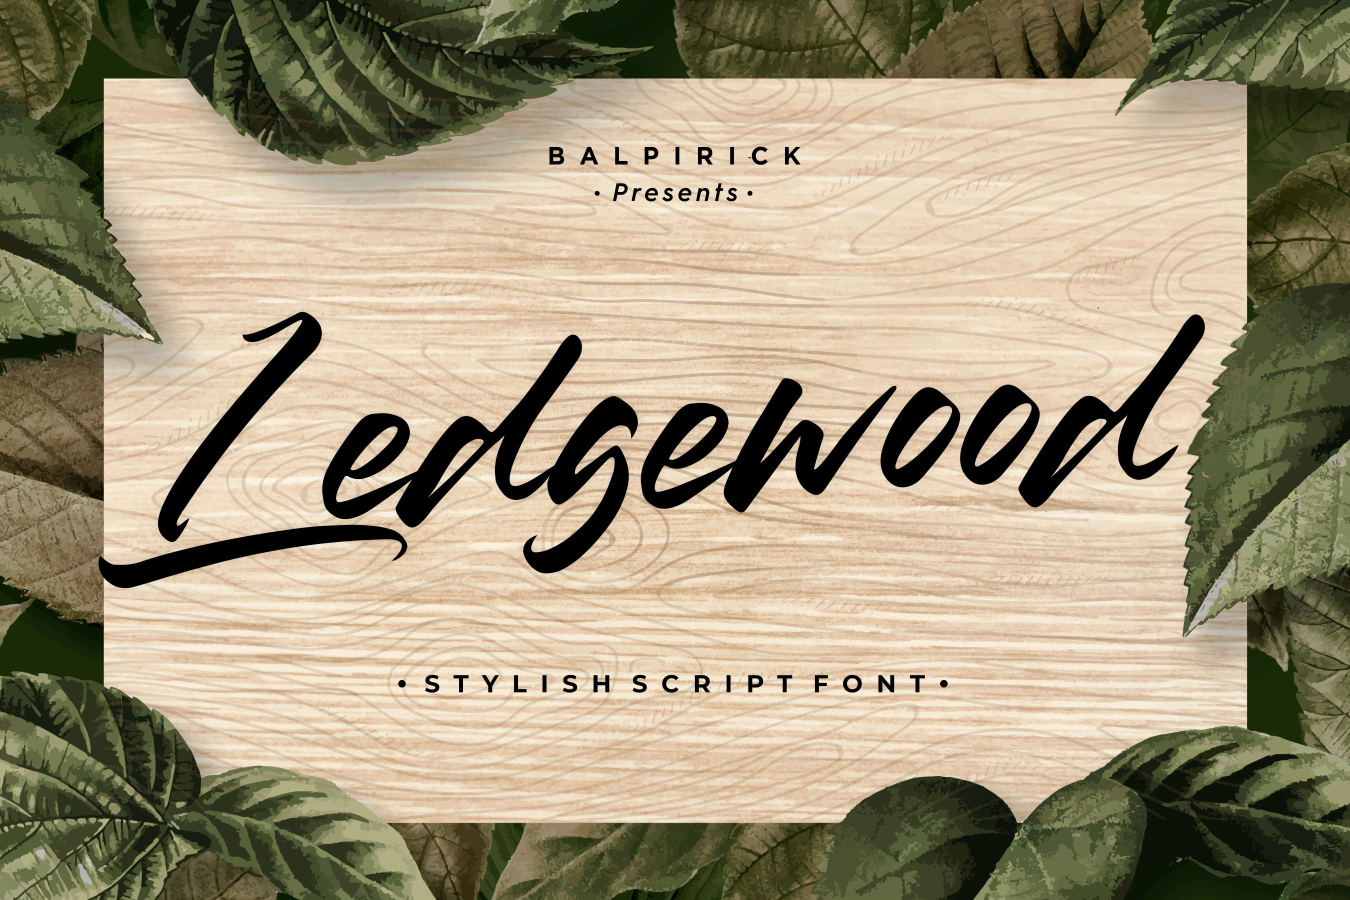 Ledgewood Stylish Script Font By Balpirick Studio Thehungryjpeg Com